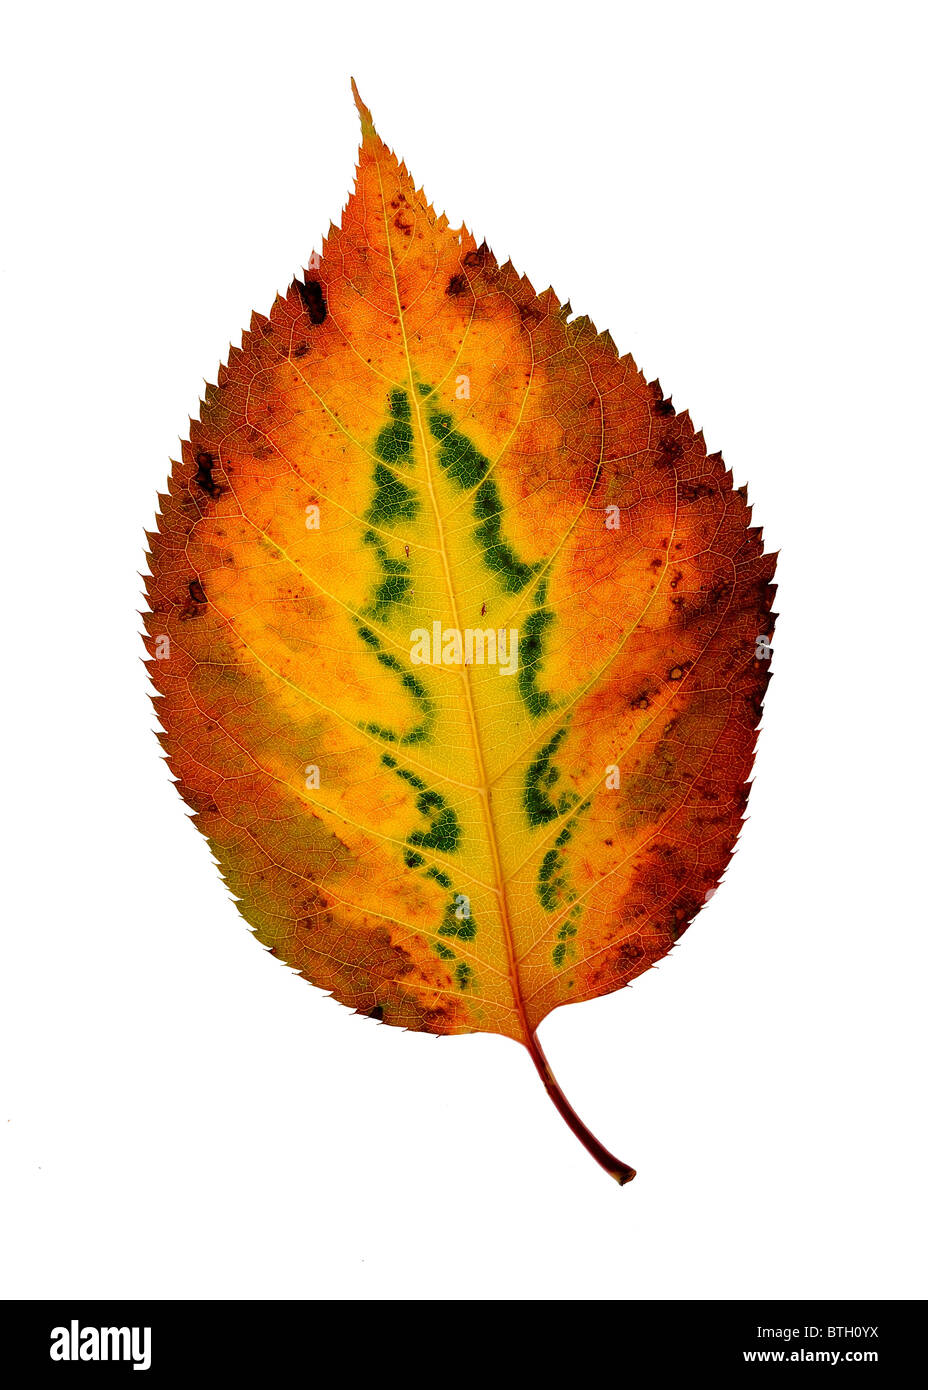 Fall leaf isolated on white background Stock Photo